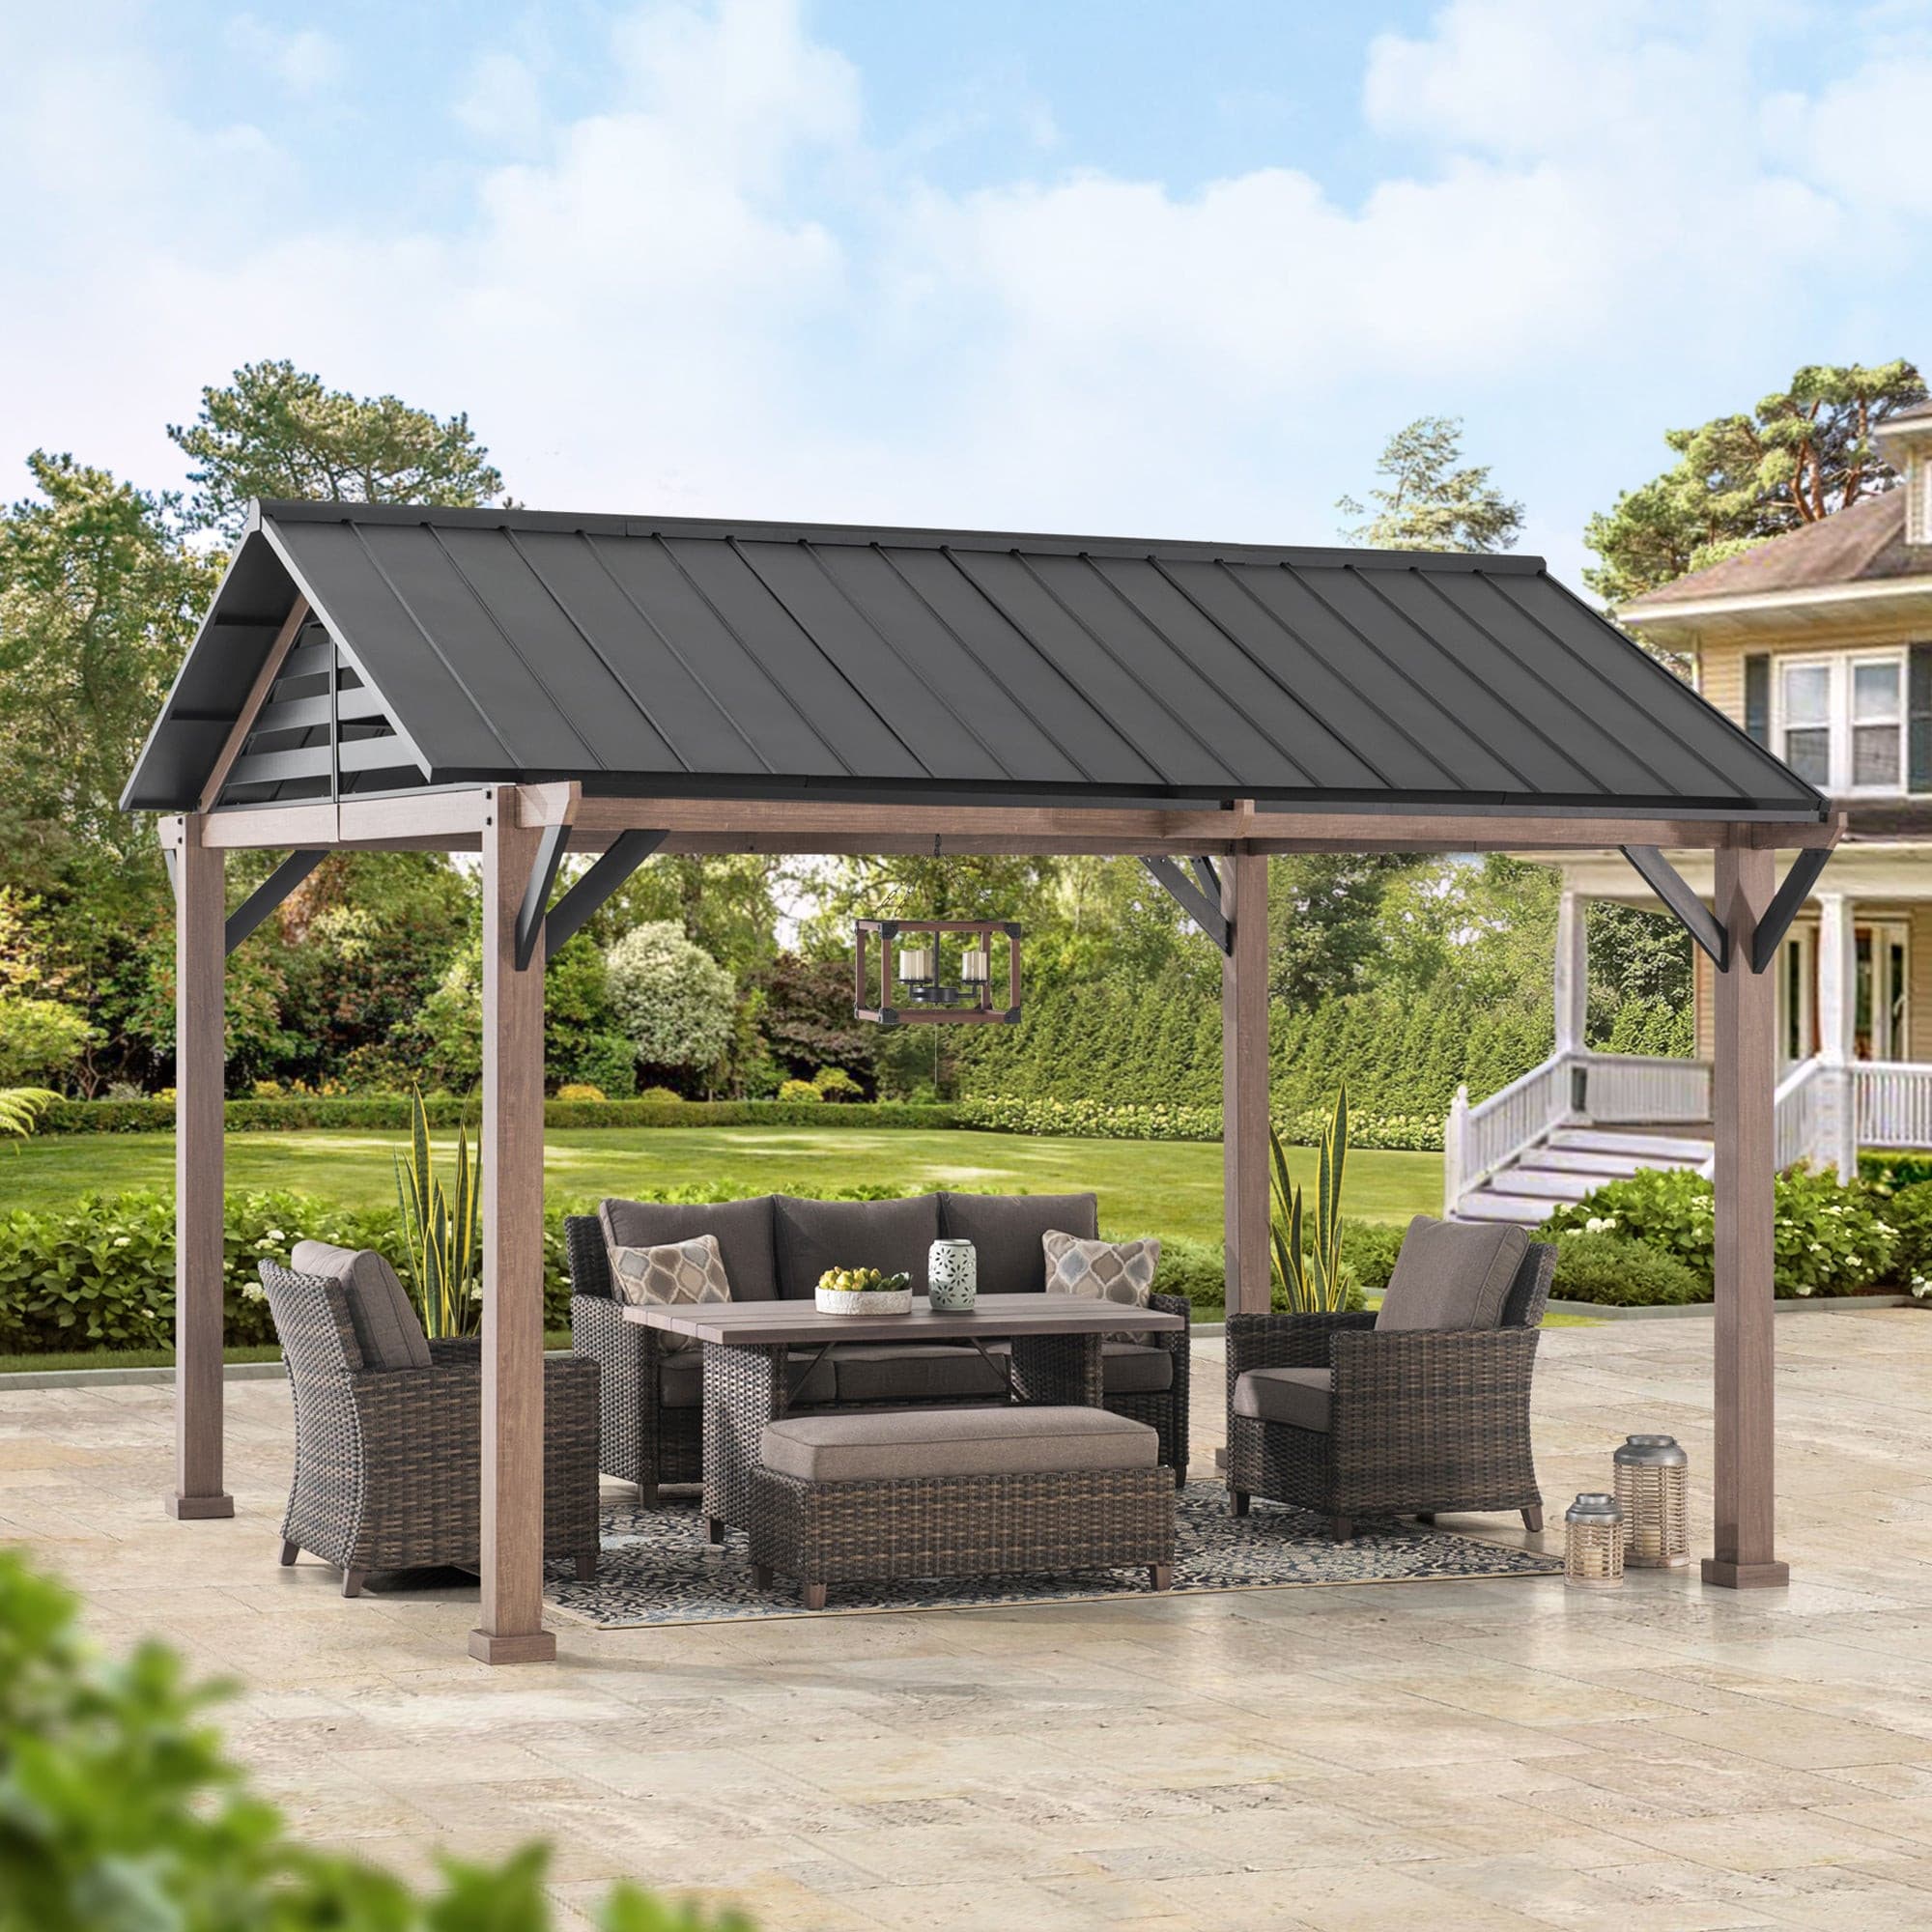 Sunjoy Outdoor Patio 13x13 Black Steel Gable Roof Backyard Hardtop Gazebo / Pavilion with Decorative Beam and Ceiling Hook